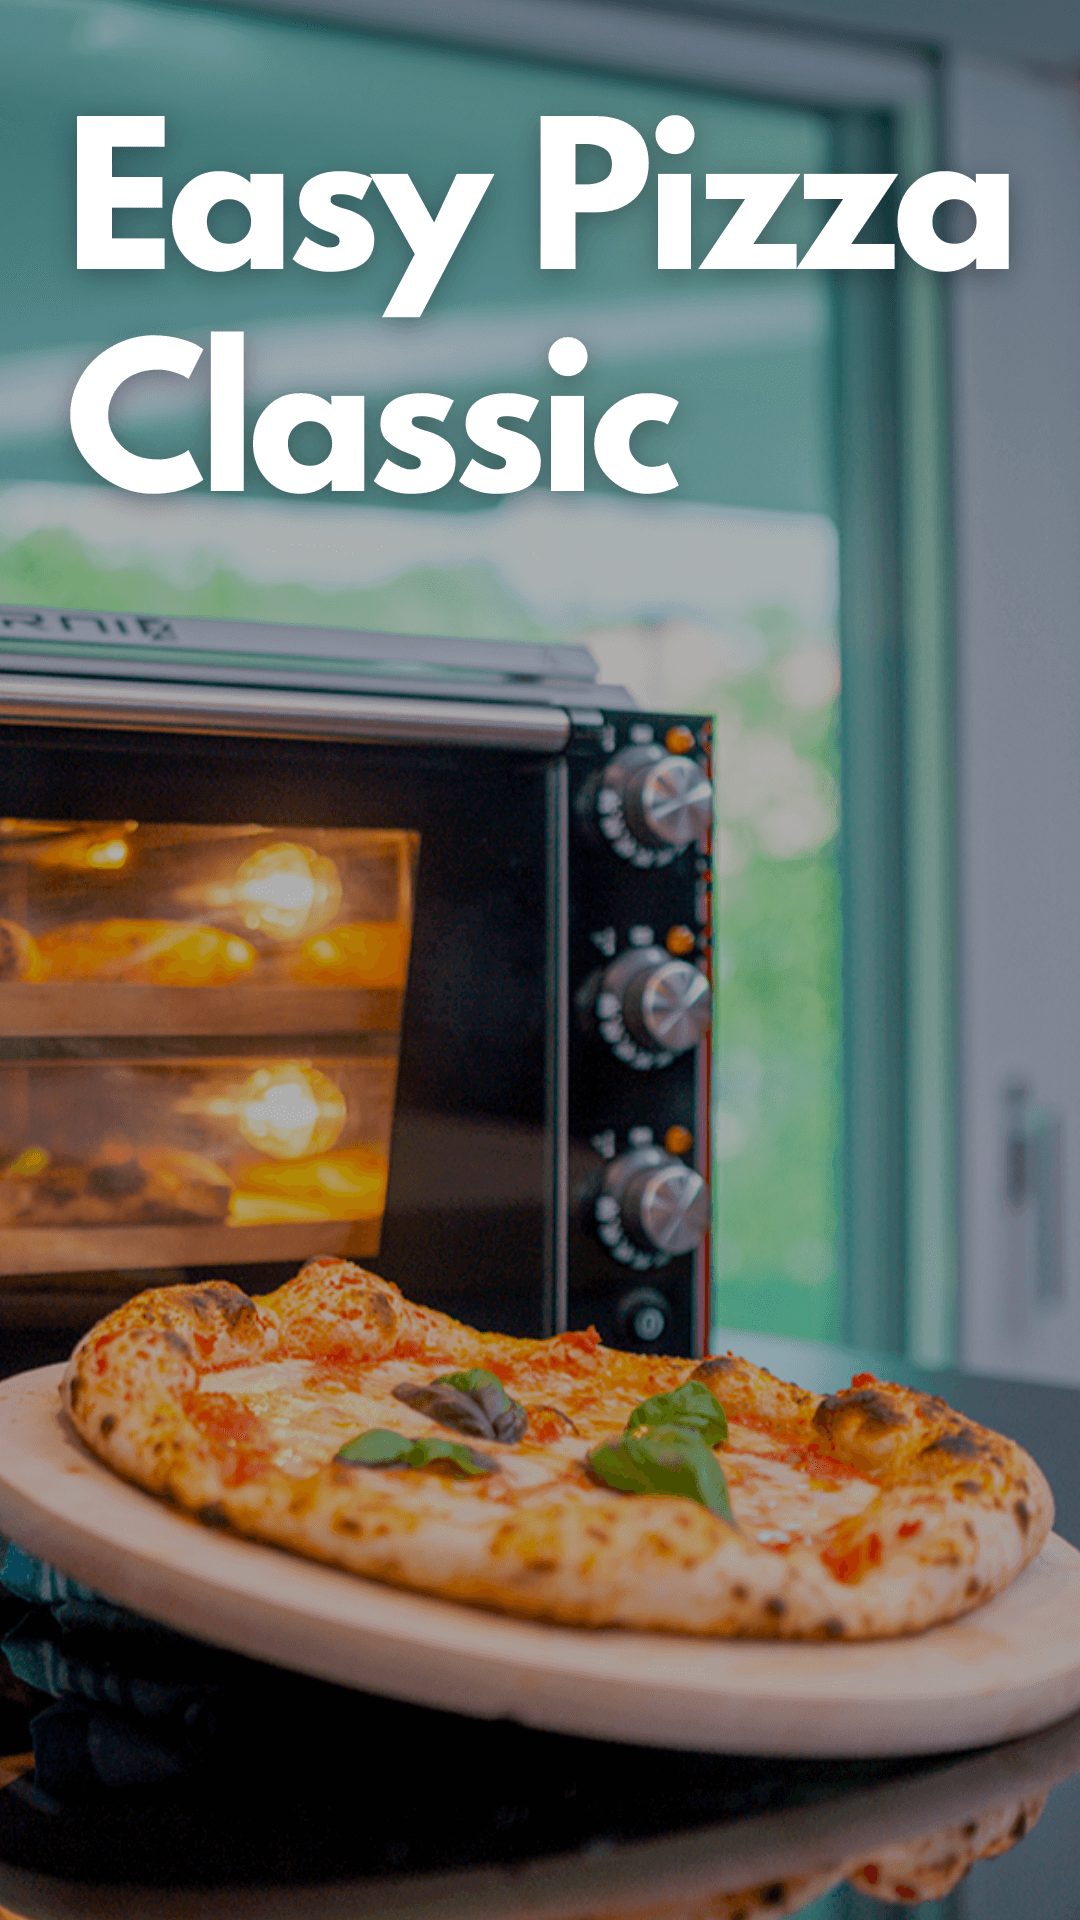 Linea-easy-pizza-classic